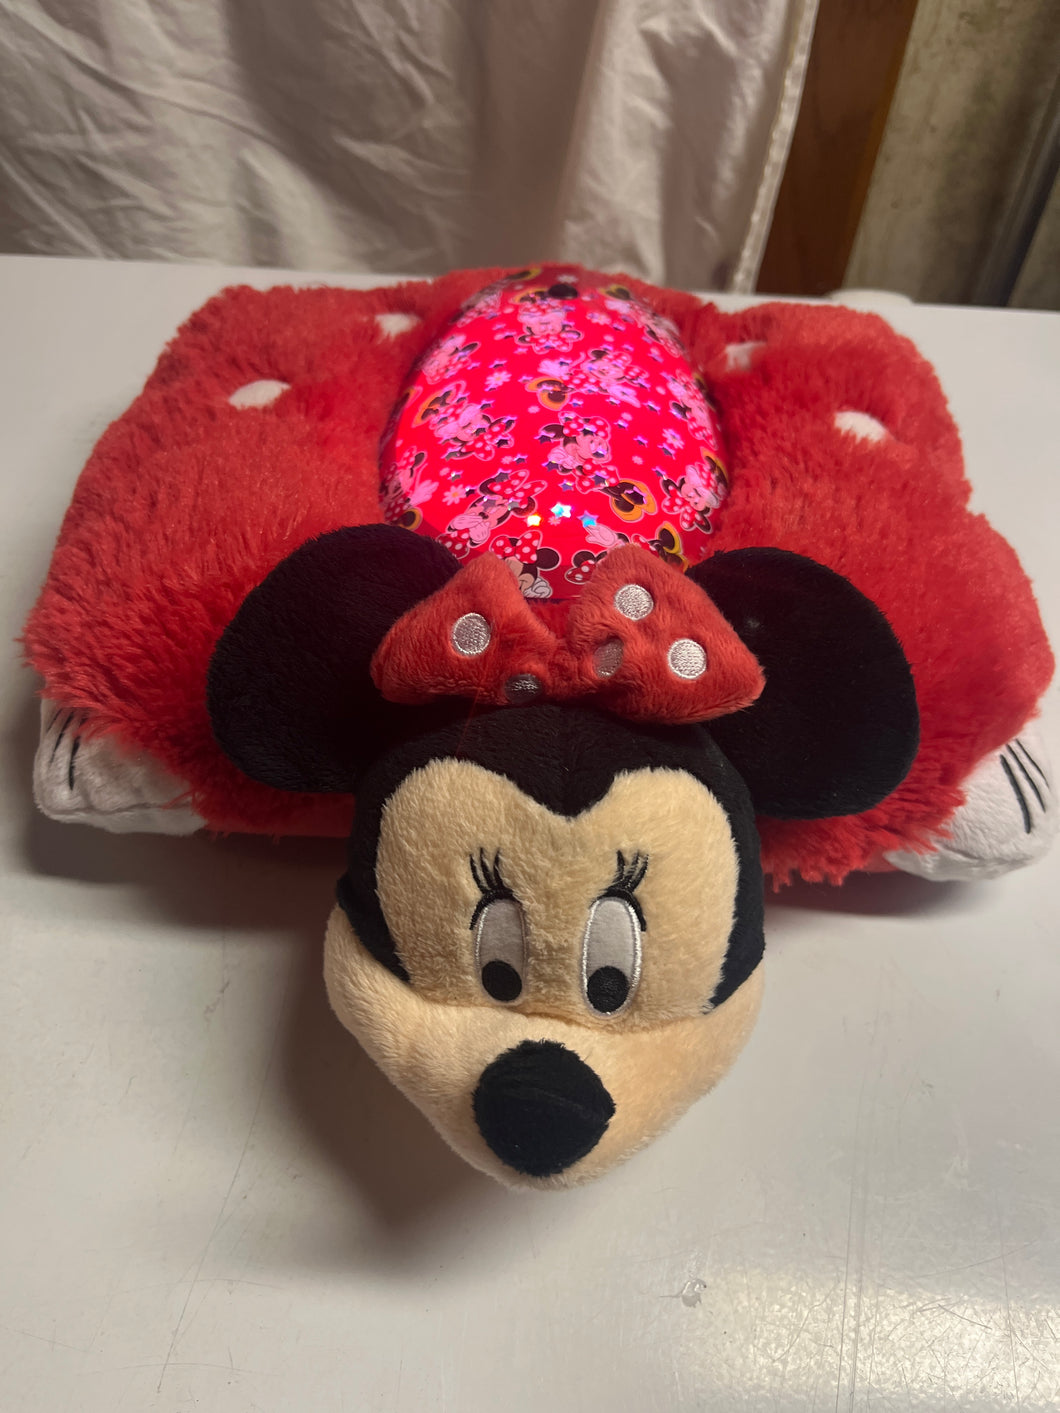 Minnie Mouse night light